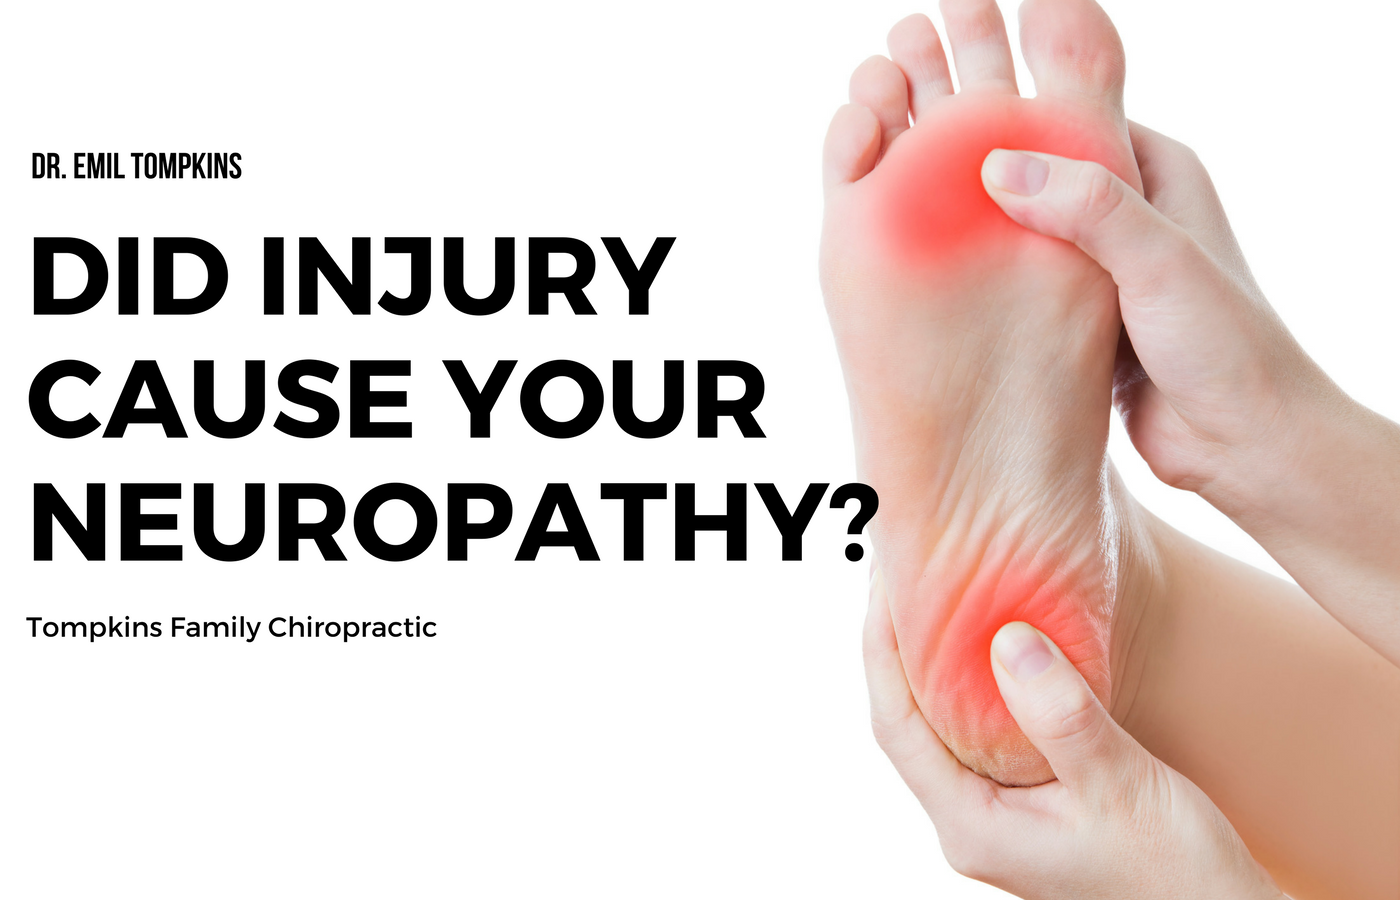 neuropathy from injury